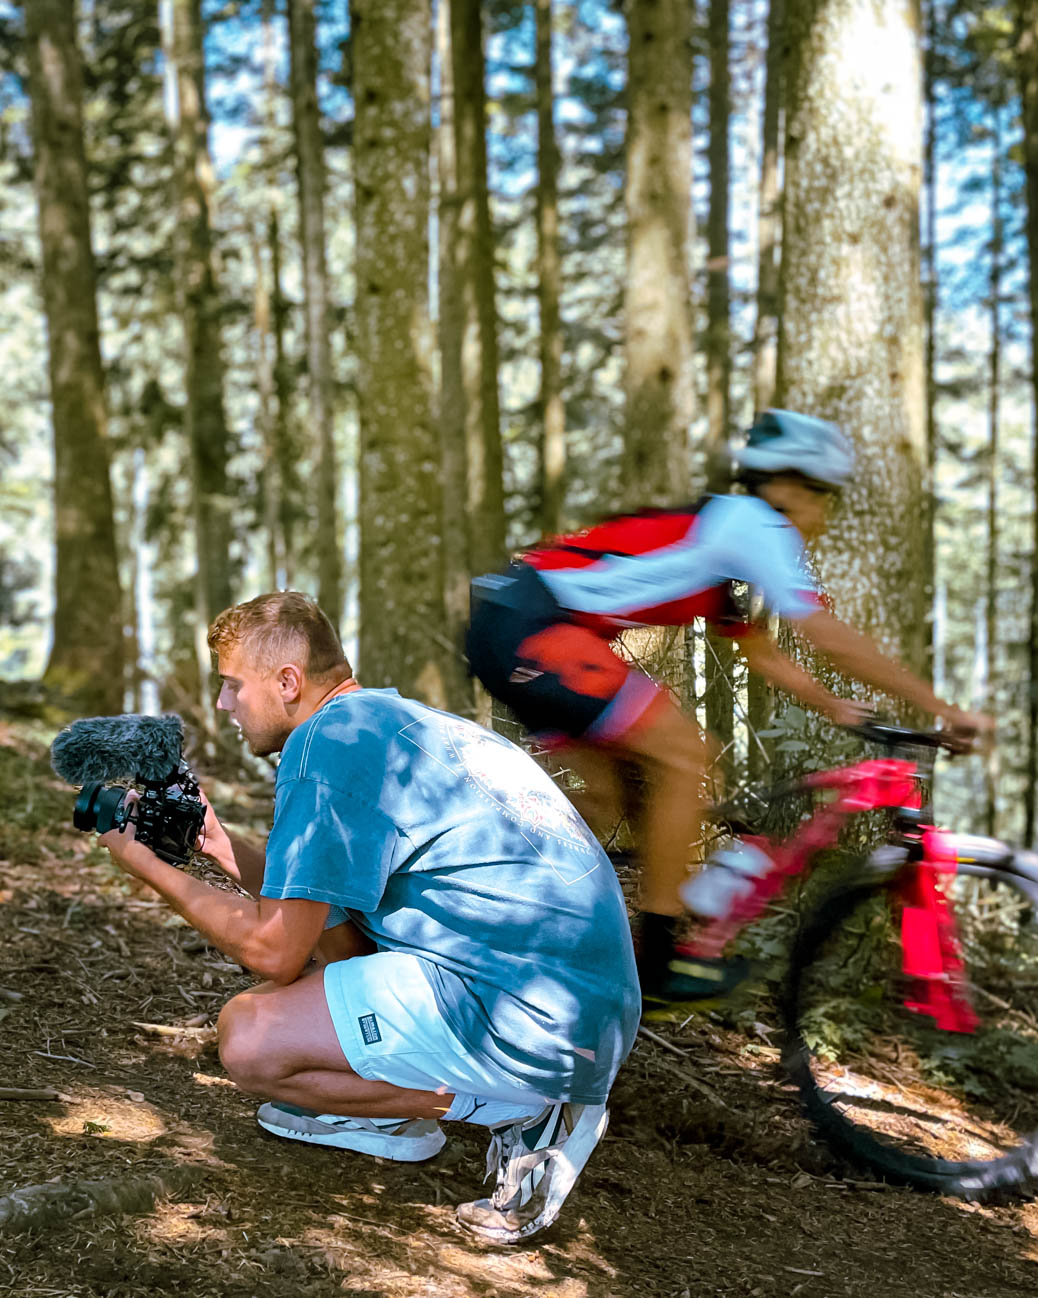 Mountain biker riding close to a cameraman